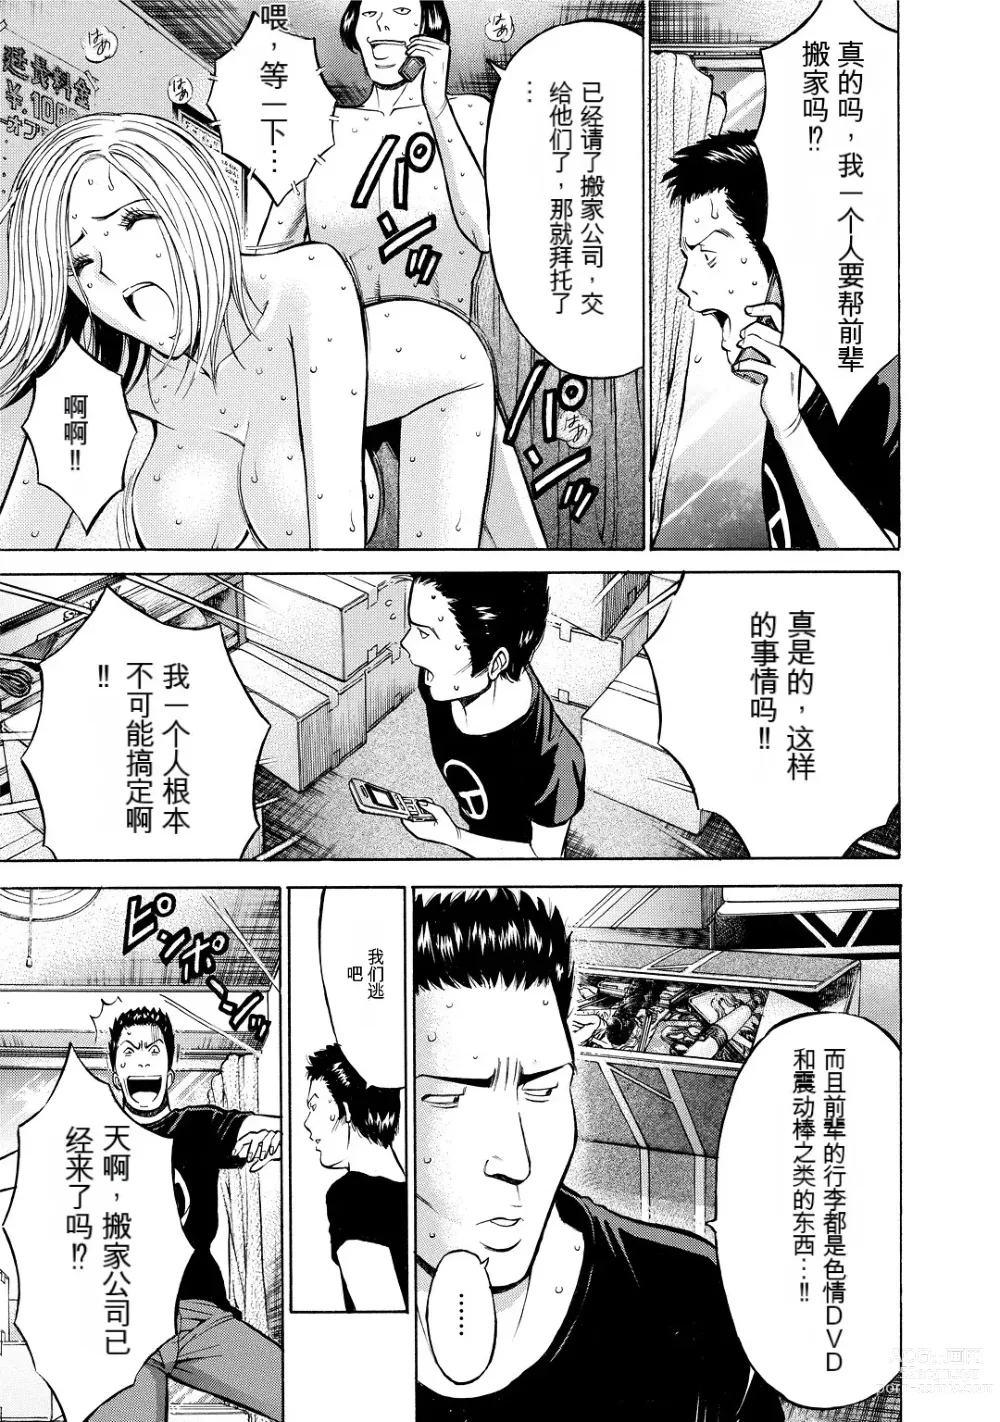 Page 11 of manga Gucchun Hikkoshitai